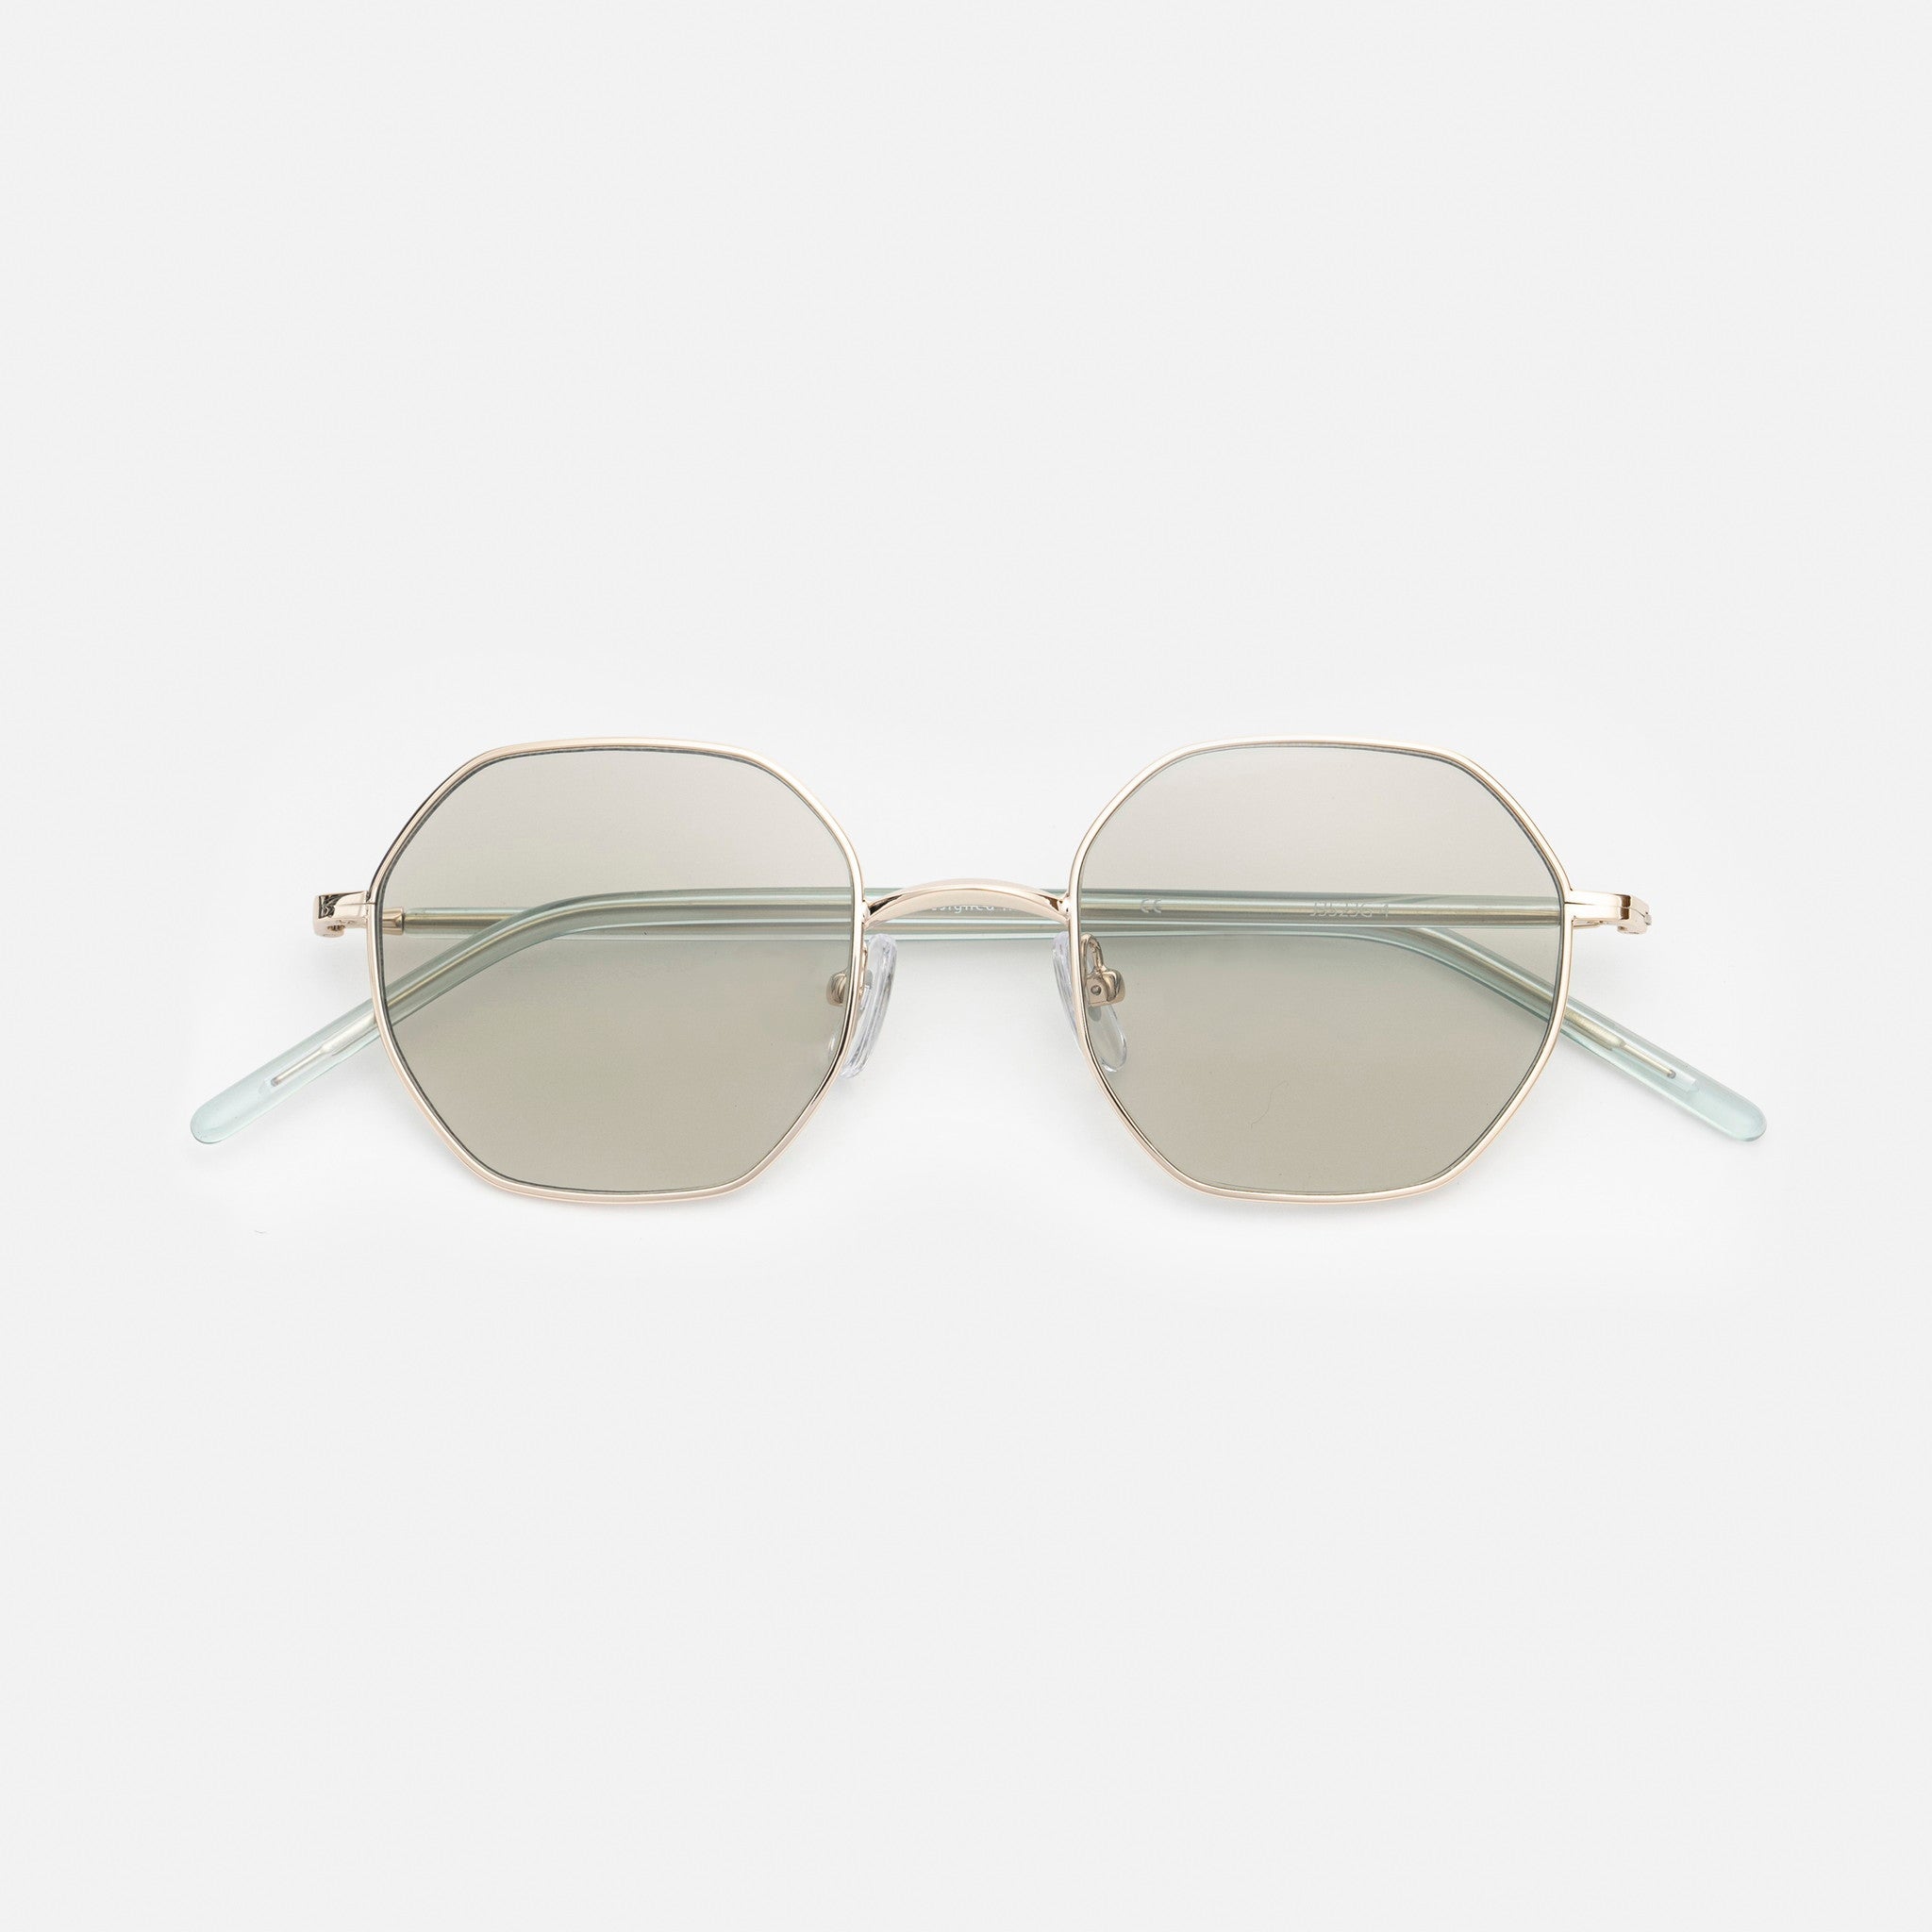 【Ciqi】CHERYL サングラス Sheer Green  Light Gray Lens sunglasses(シェリル シアーグリーン ライトグレーレンズ)